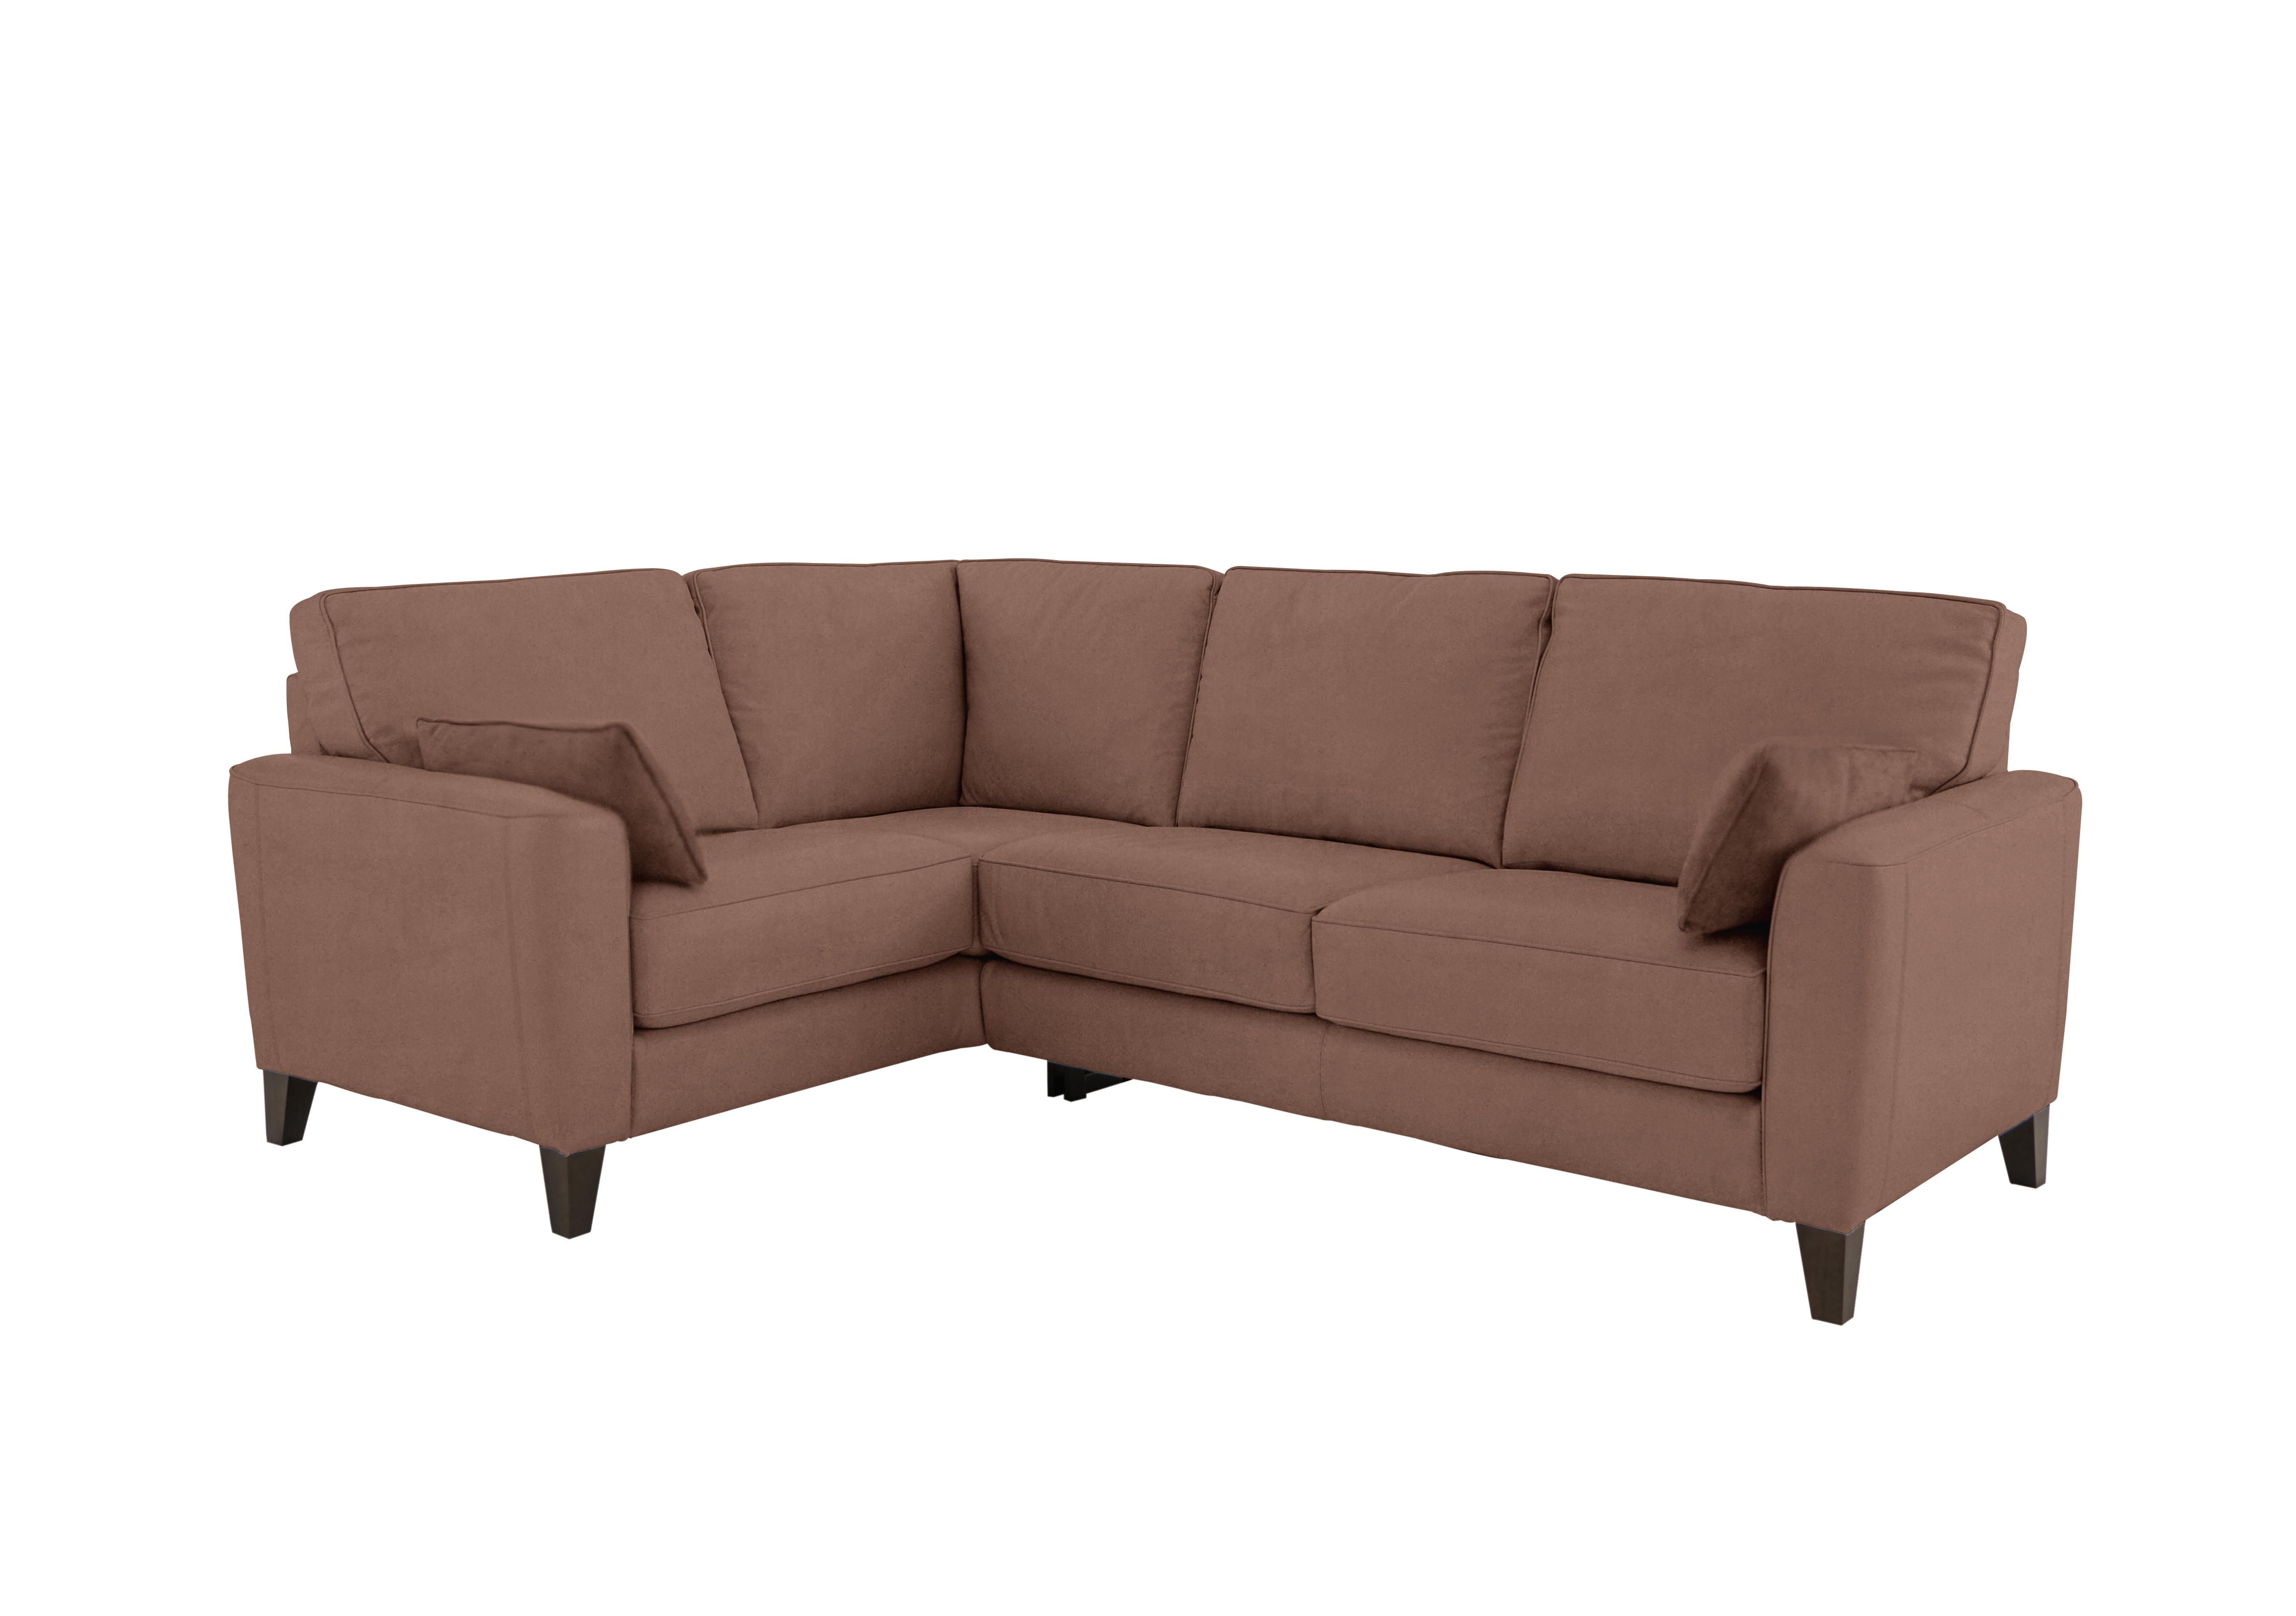 Brondby Small Fabric Corner Sofa in Bfa-Blj-R05 Hazelnut on Furniture Village